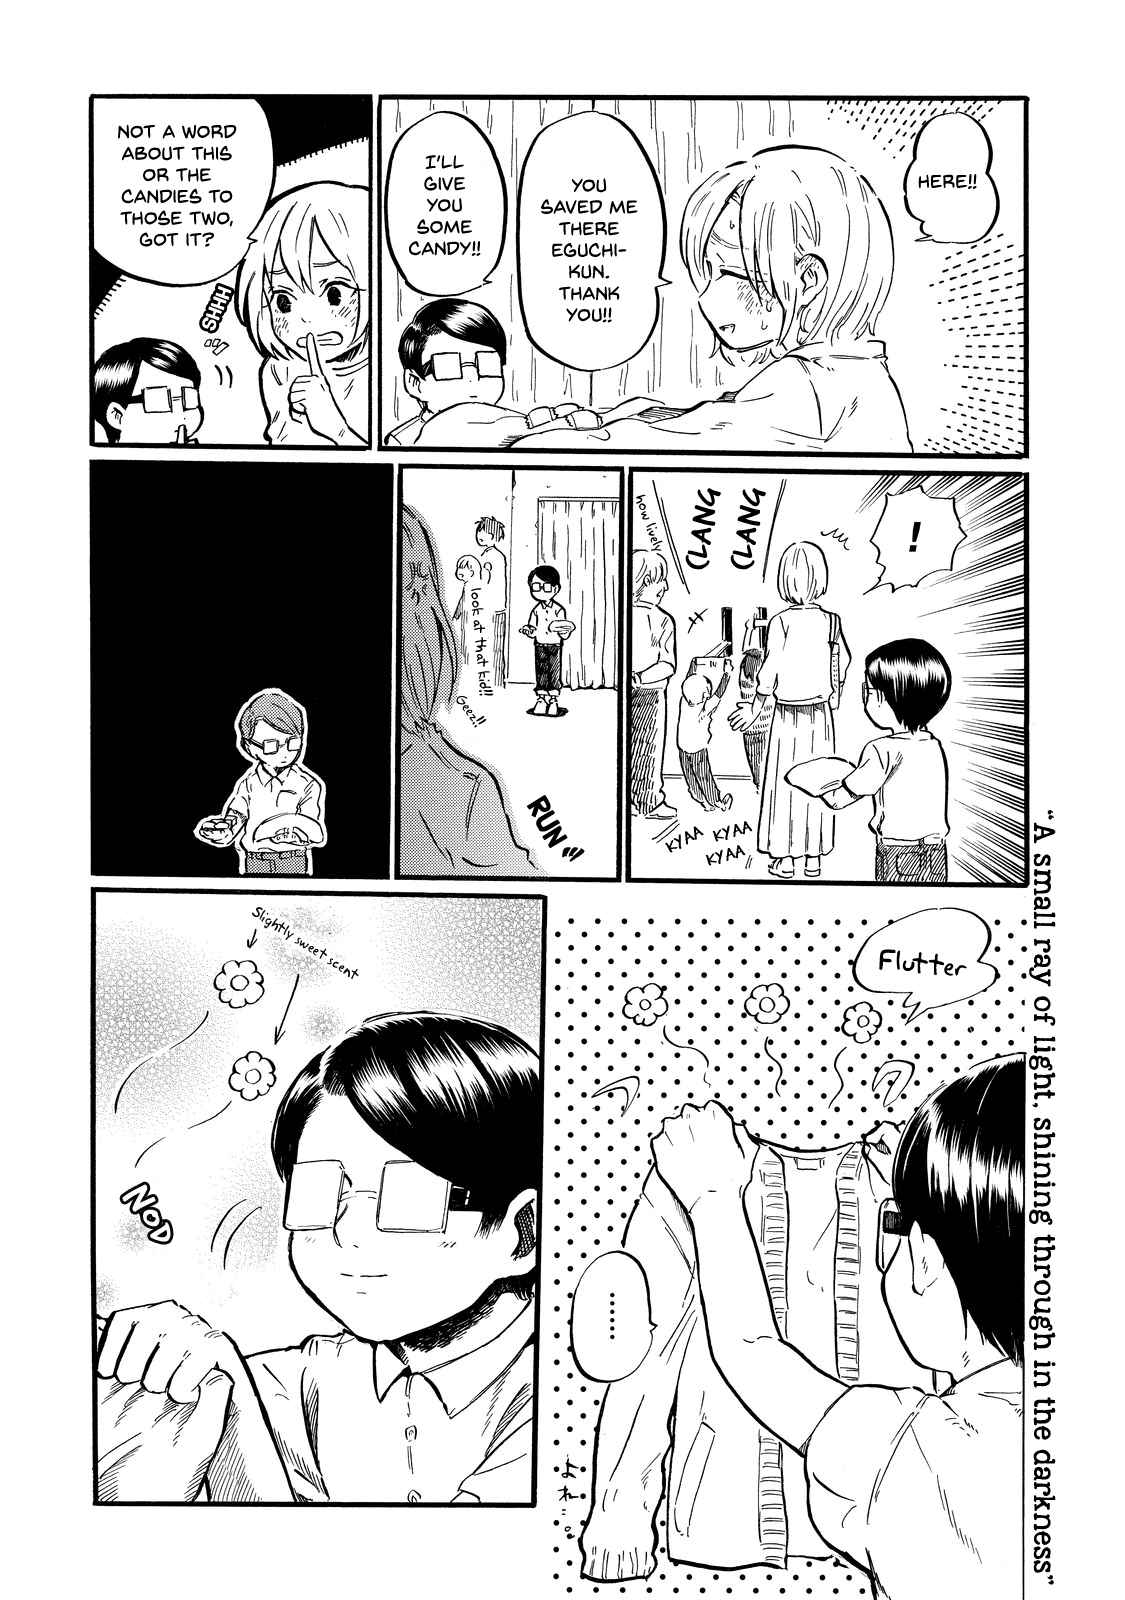 Eguchi kun Doesn't Miss a Thing Vol. 1 Ch. 4 Eguchi kun and Going out